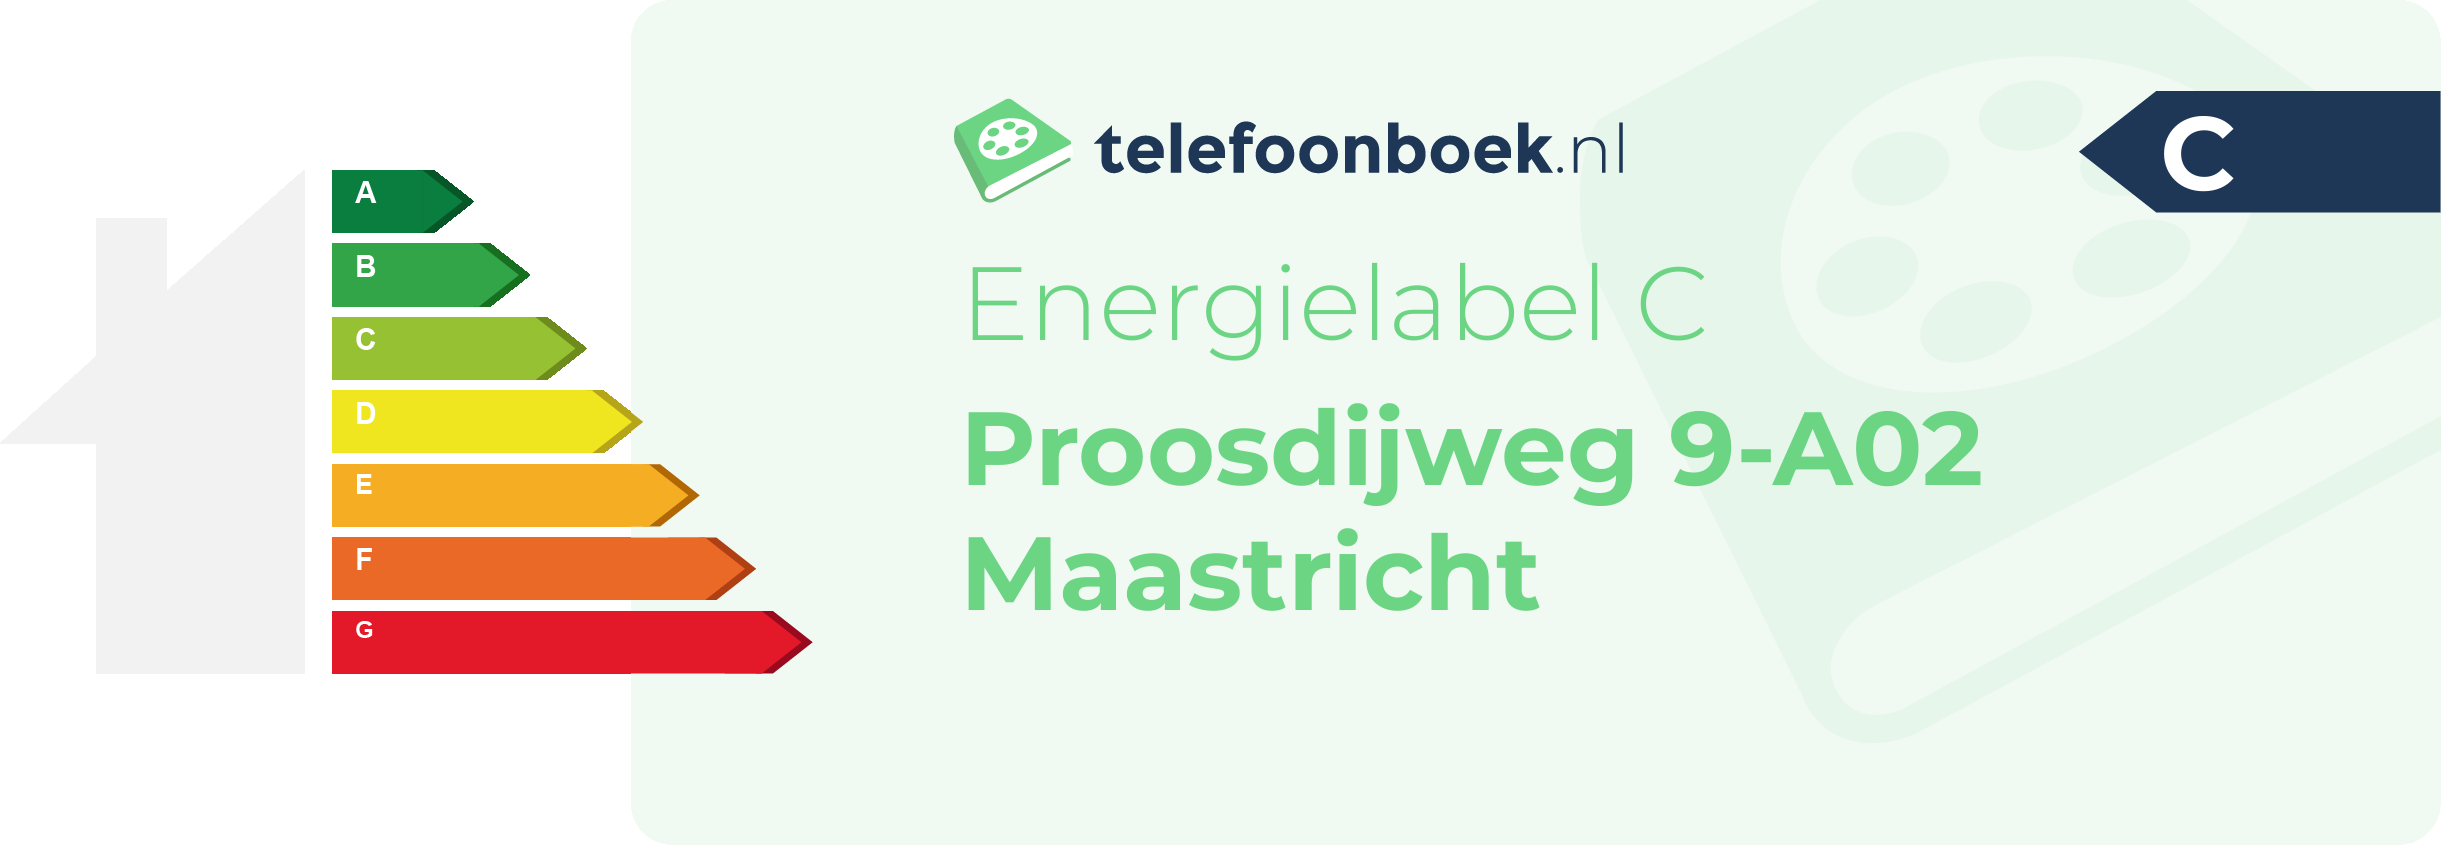 Energielabel Proosdijweg 9-A02 Maastricht